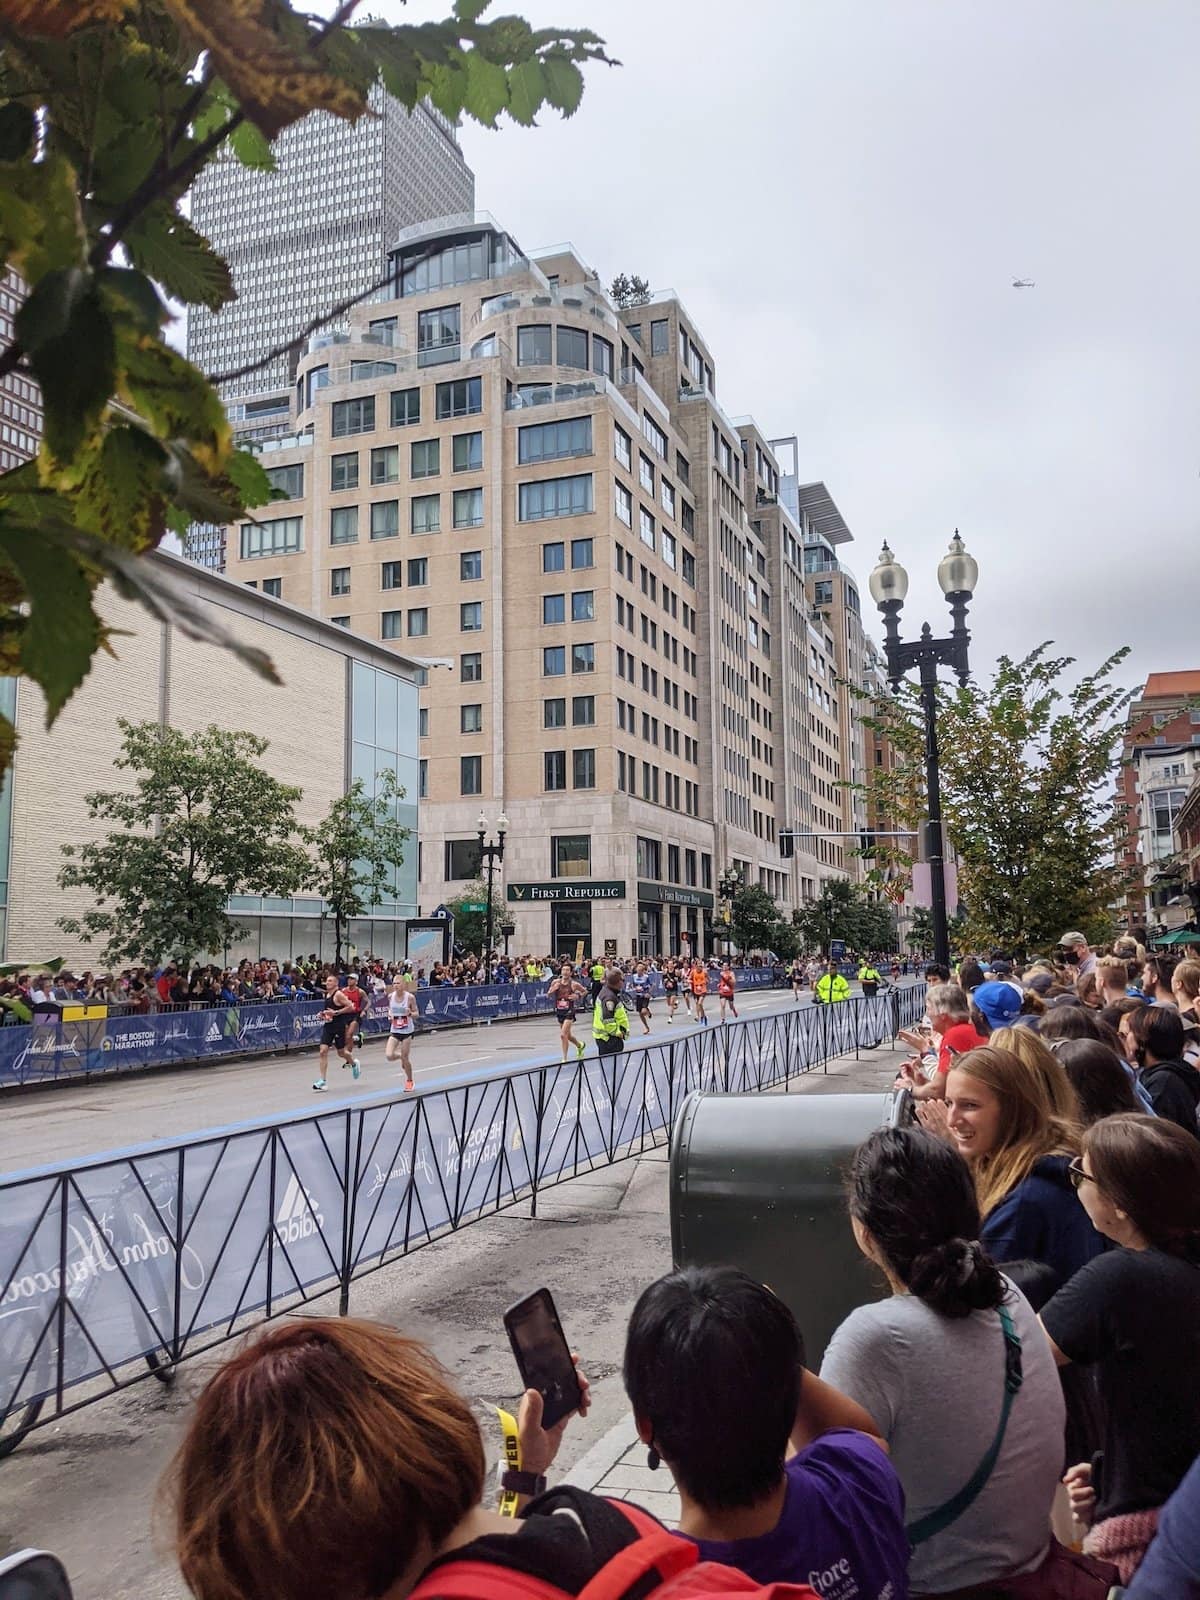 Finish line of the Boston Marathon in 2022